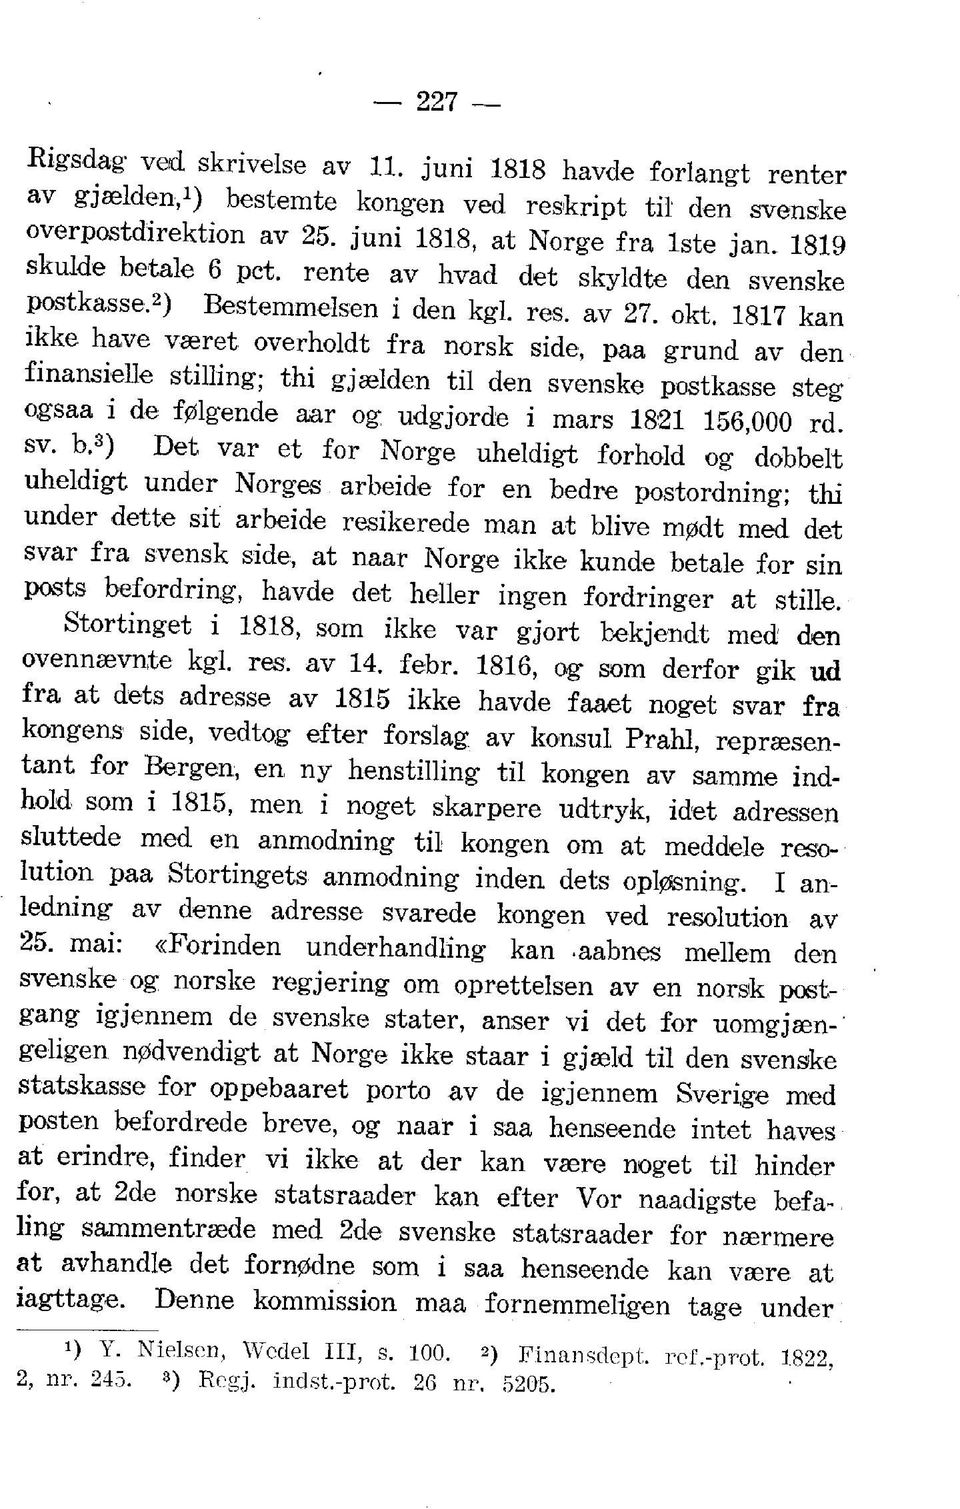 1817 kan ikke have vseret overholdt fra norsk side, paa grund av den finansielle stilling; thi gjselden til den svenske postkasse steg ogsaa i de f01gende aar og udgjorde i mars 1821 156,000 rd. sv. b.